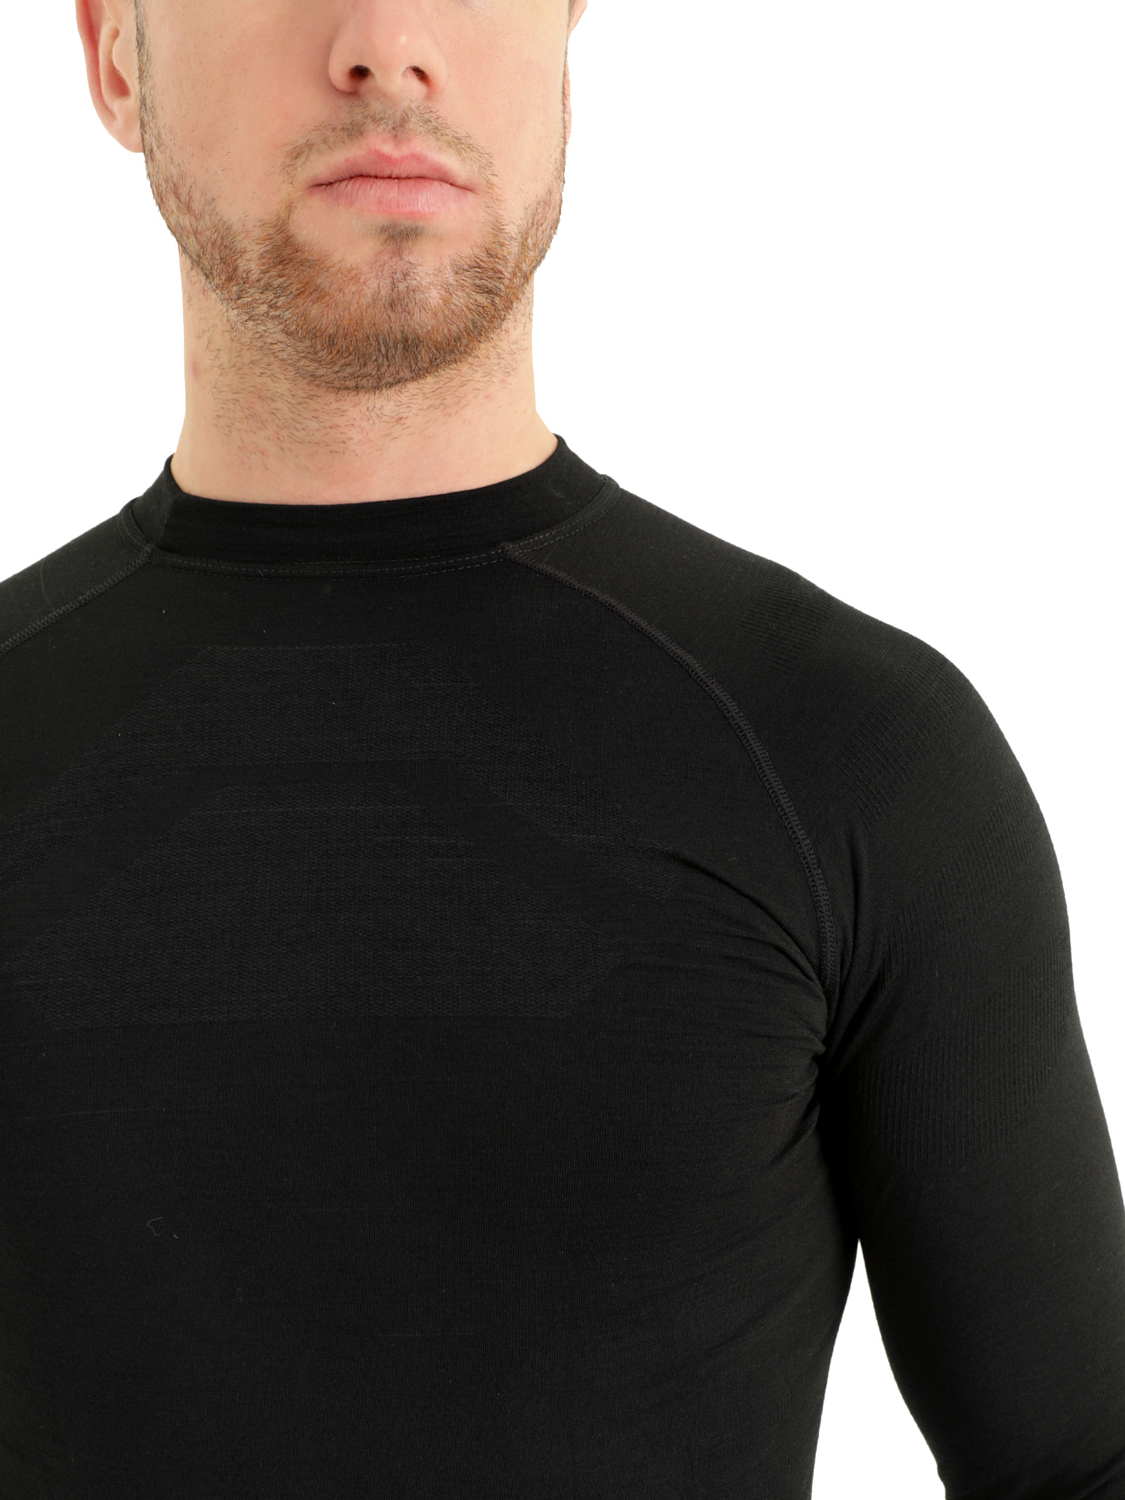 Футболка с длинным рукавом Ternua Paine T-Shirt Black